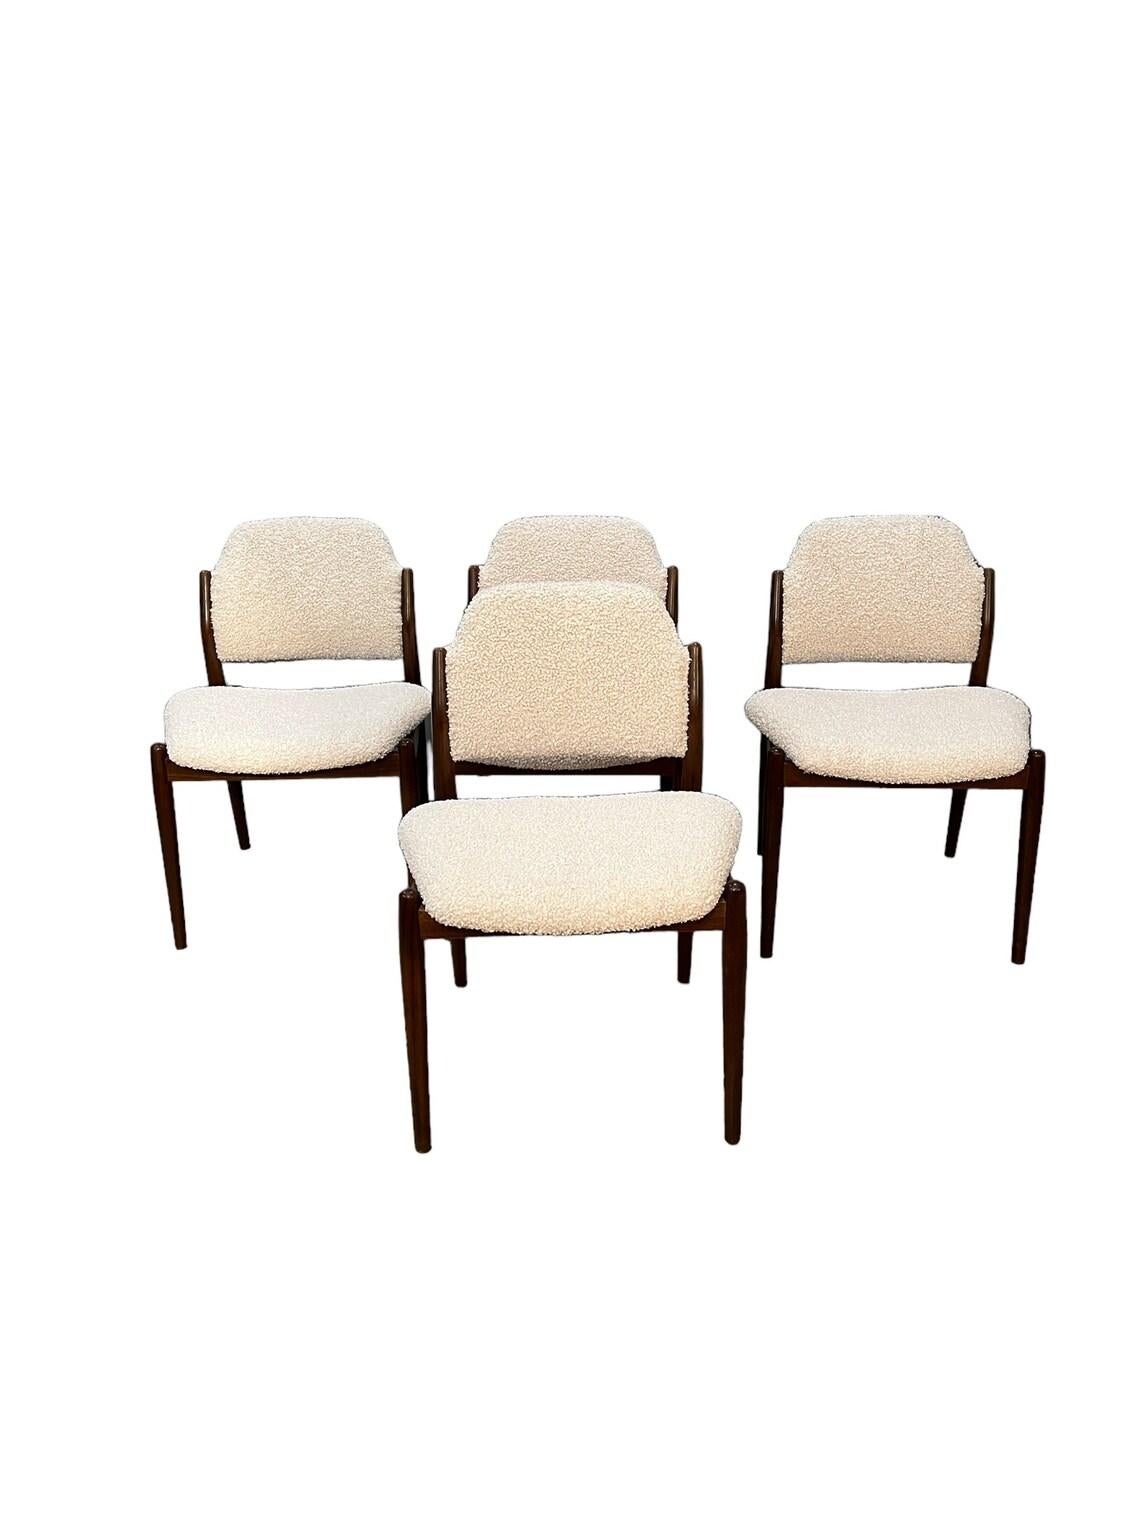 Danish Mid Century danish rosewood dining chairs set of 4